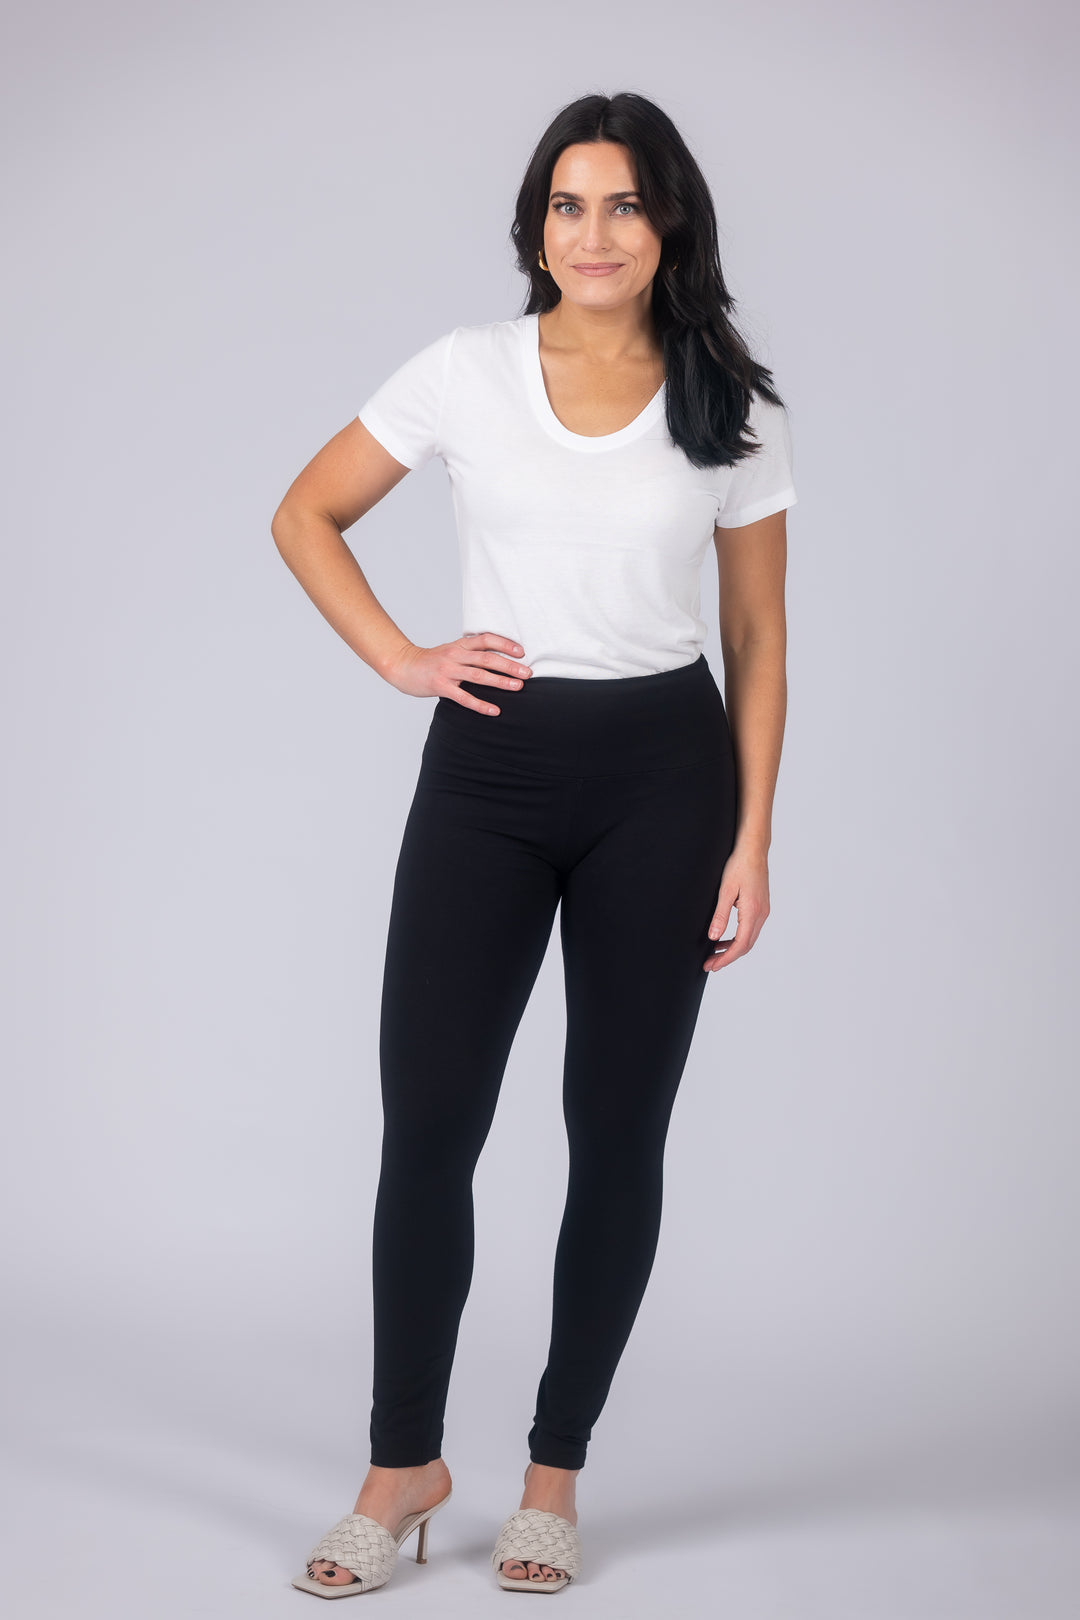 EttelLut Cotton Spandex Full Leggings Pants Activewear for Women White XL 